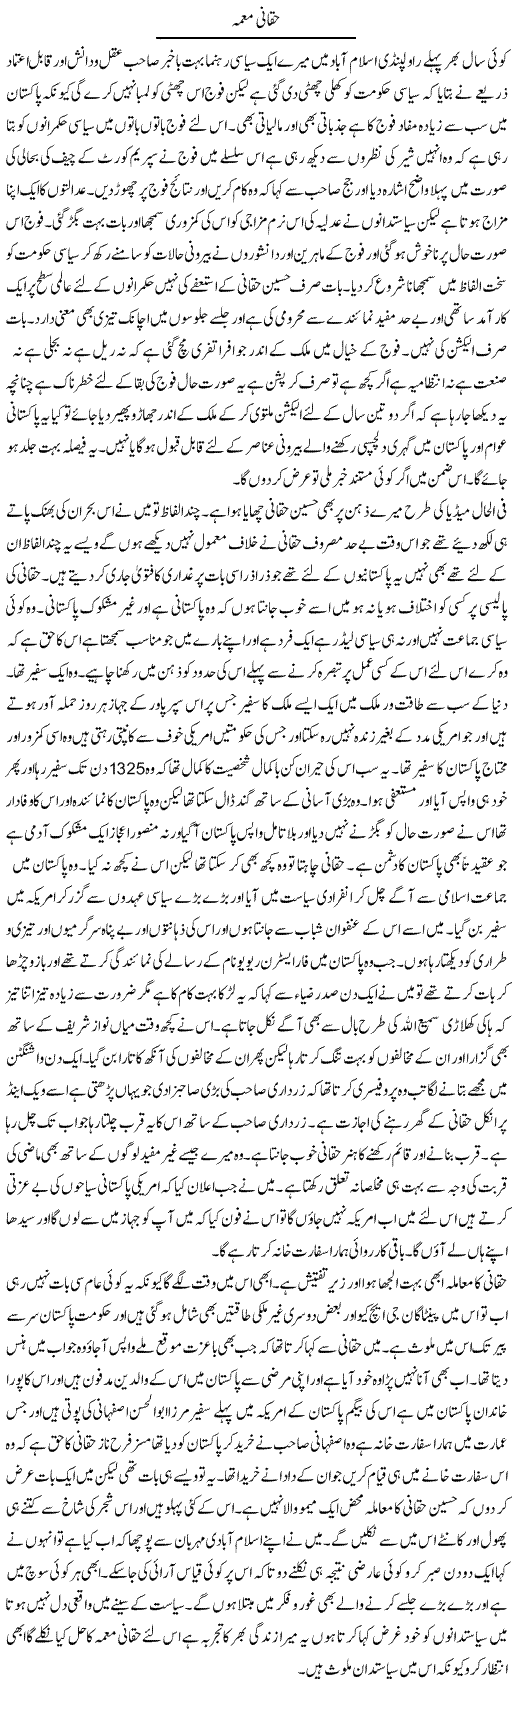 Haqqani Memo Express Column Abdul Qadir 24 November 2011